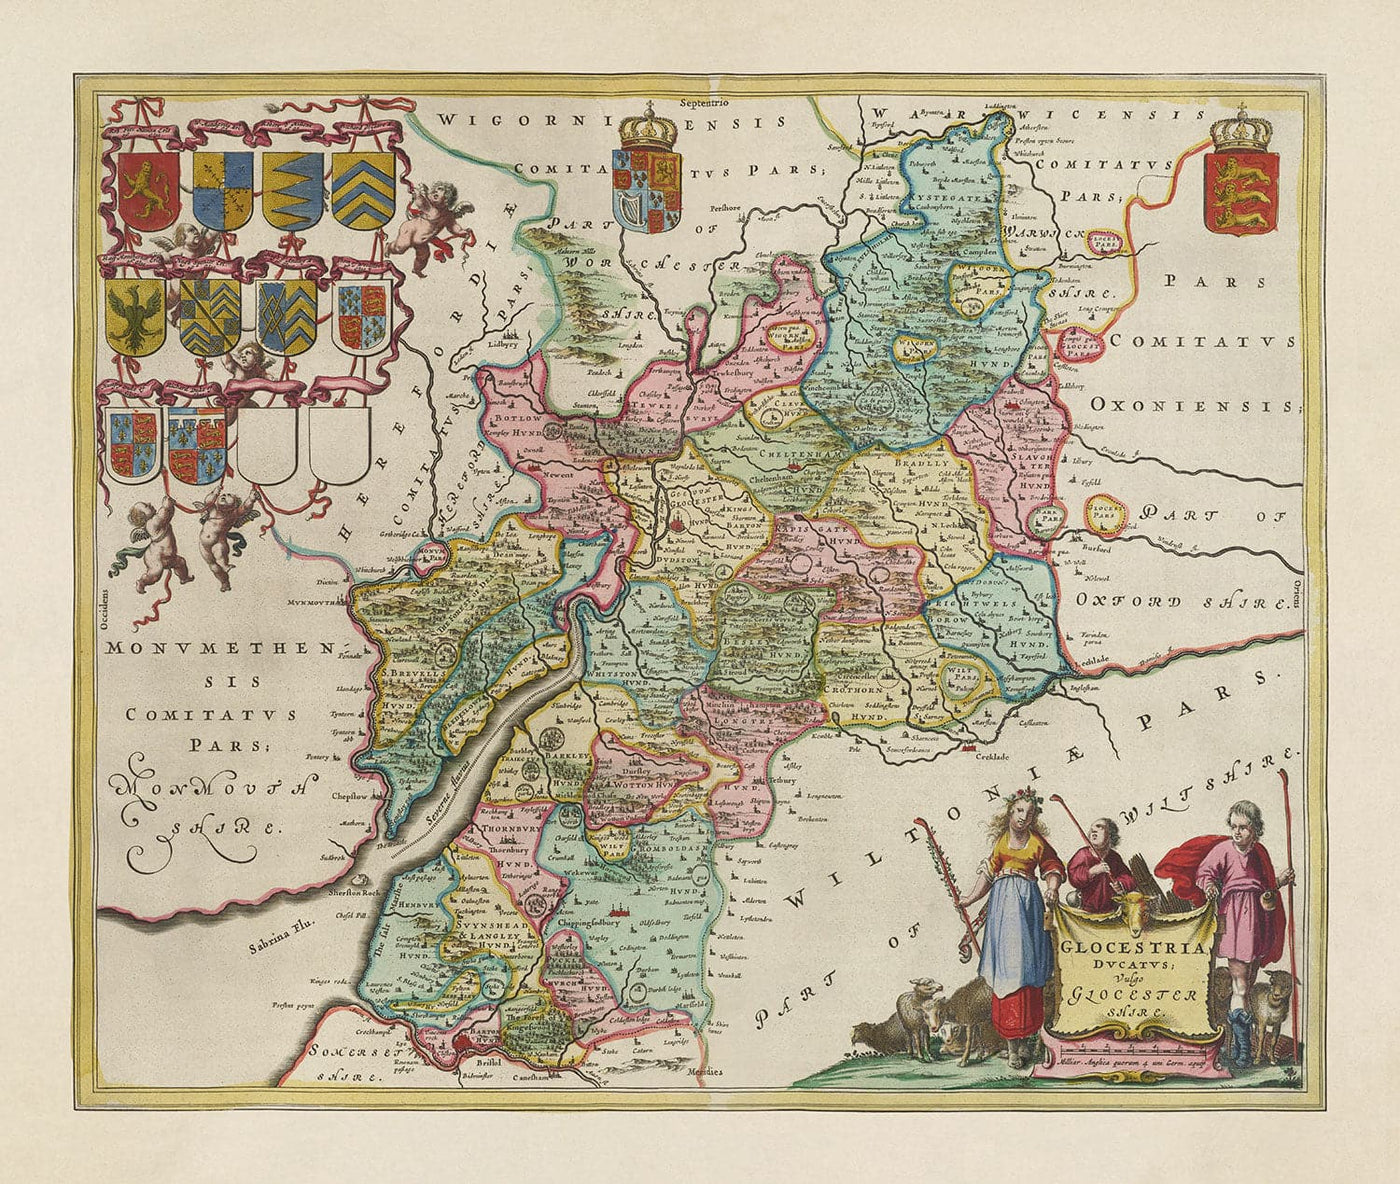 Ancienne carte du Gloucestershire en 1665 par Joan Blaeu - Bristol, Cheltenham, Gloucester, Kingswood, Filton, Stroud